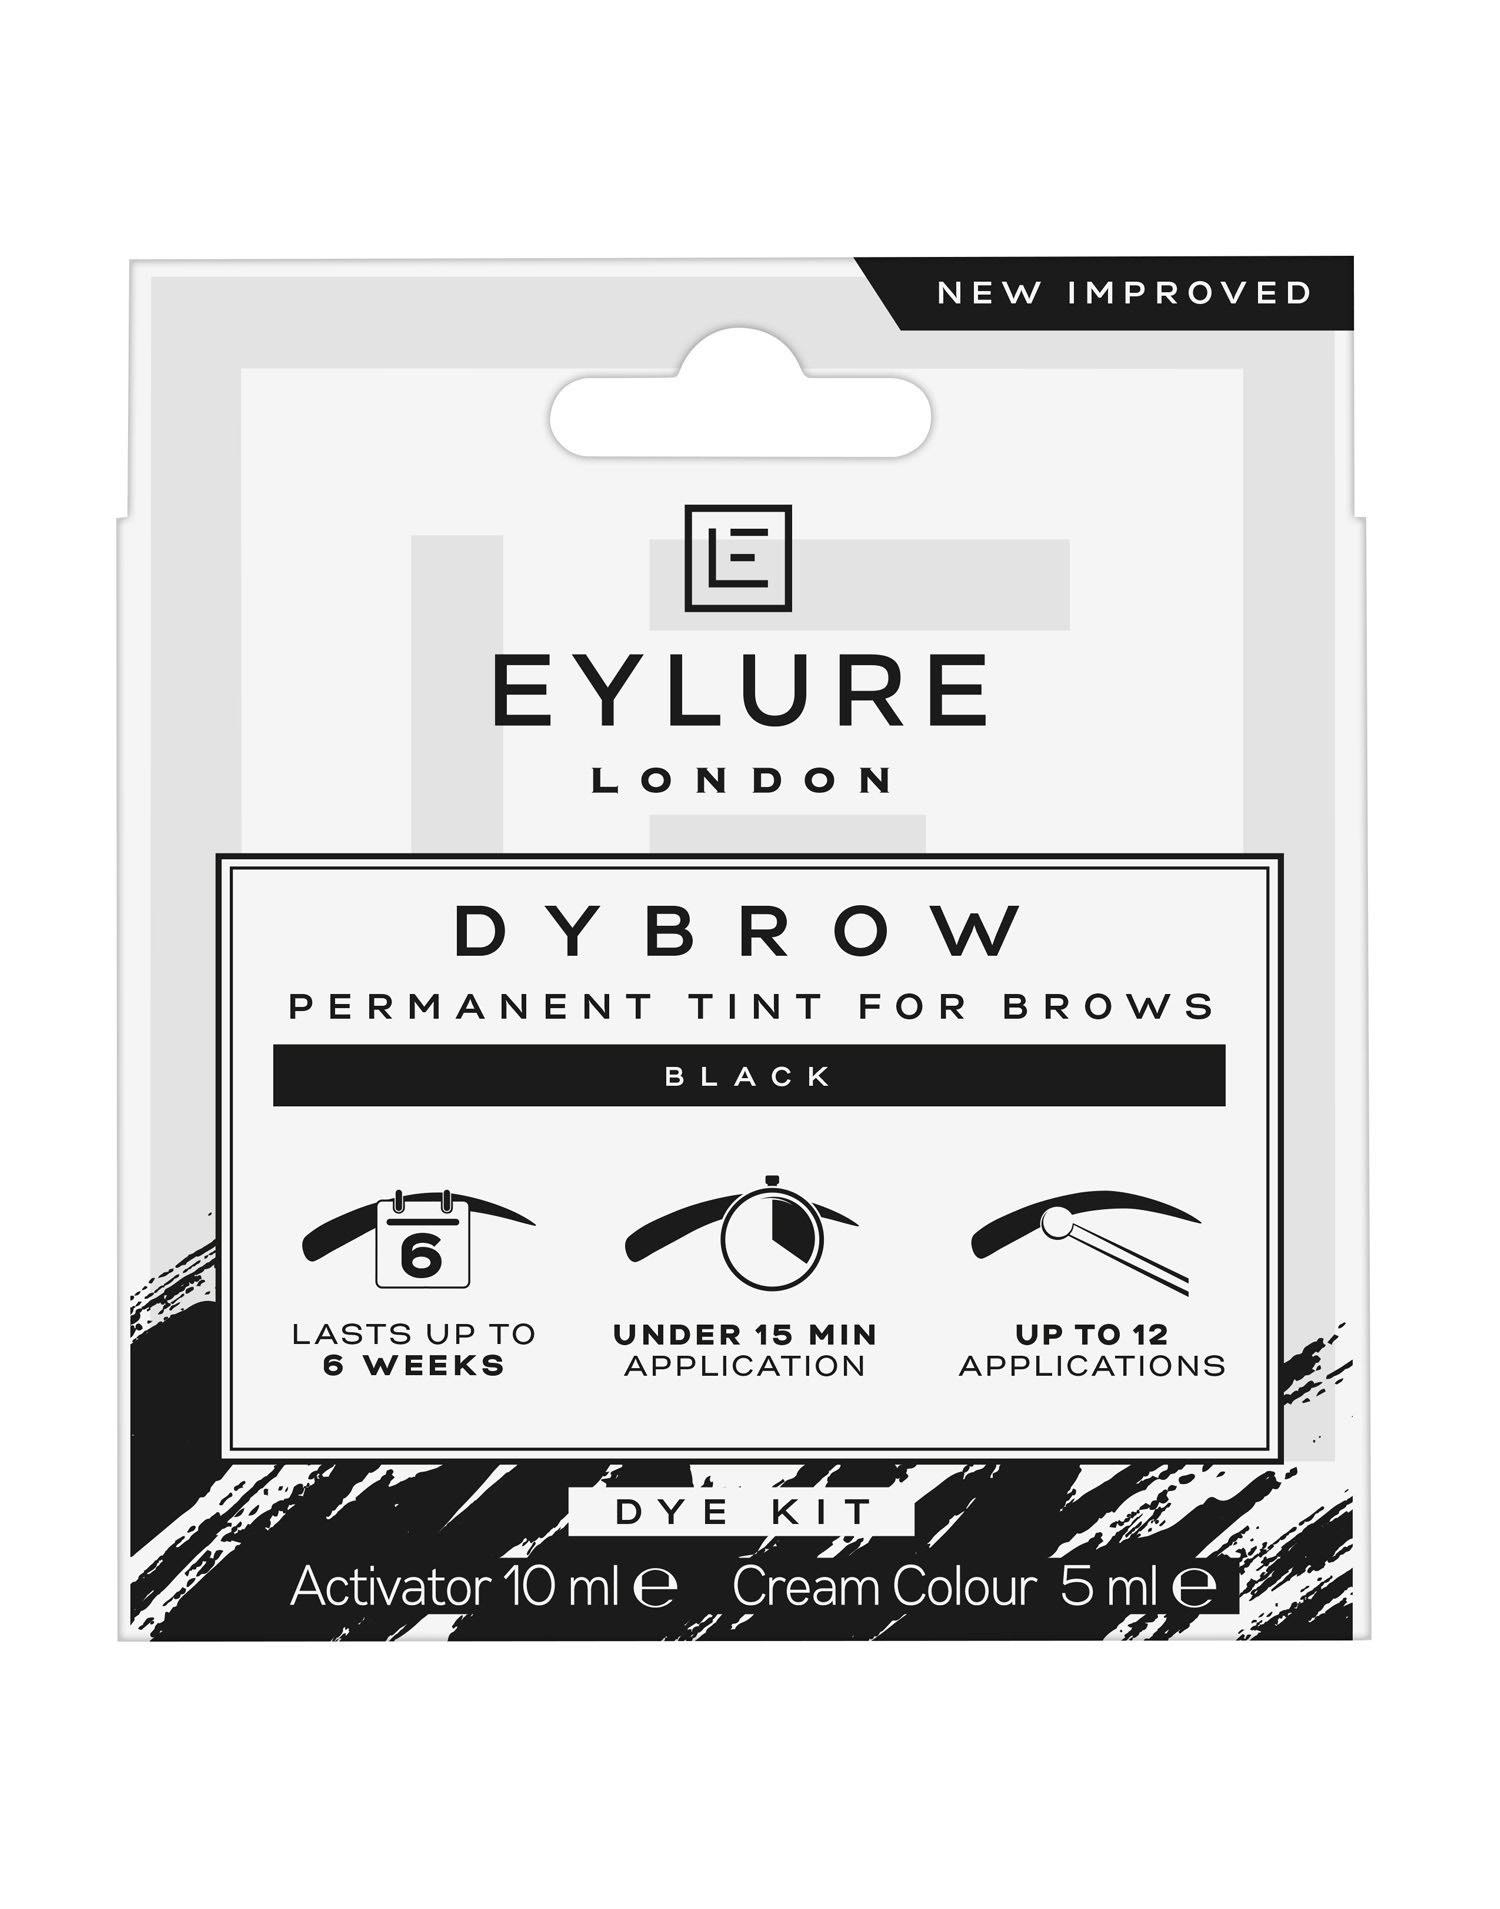 Eylure Pro Brow Dybrow Dye Kit - Black